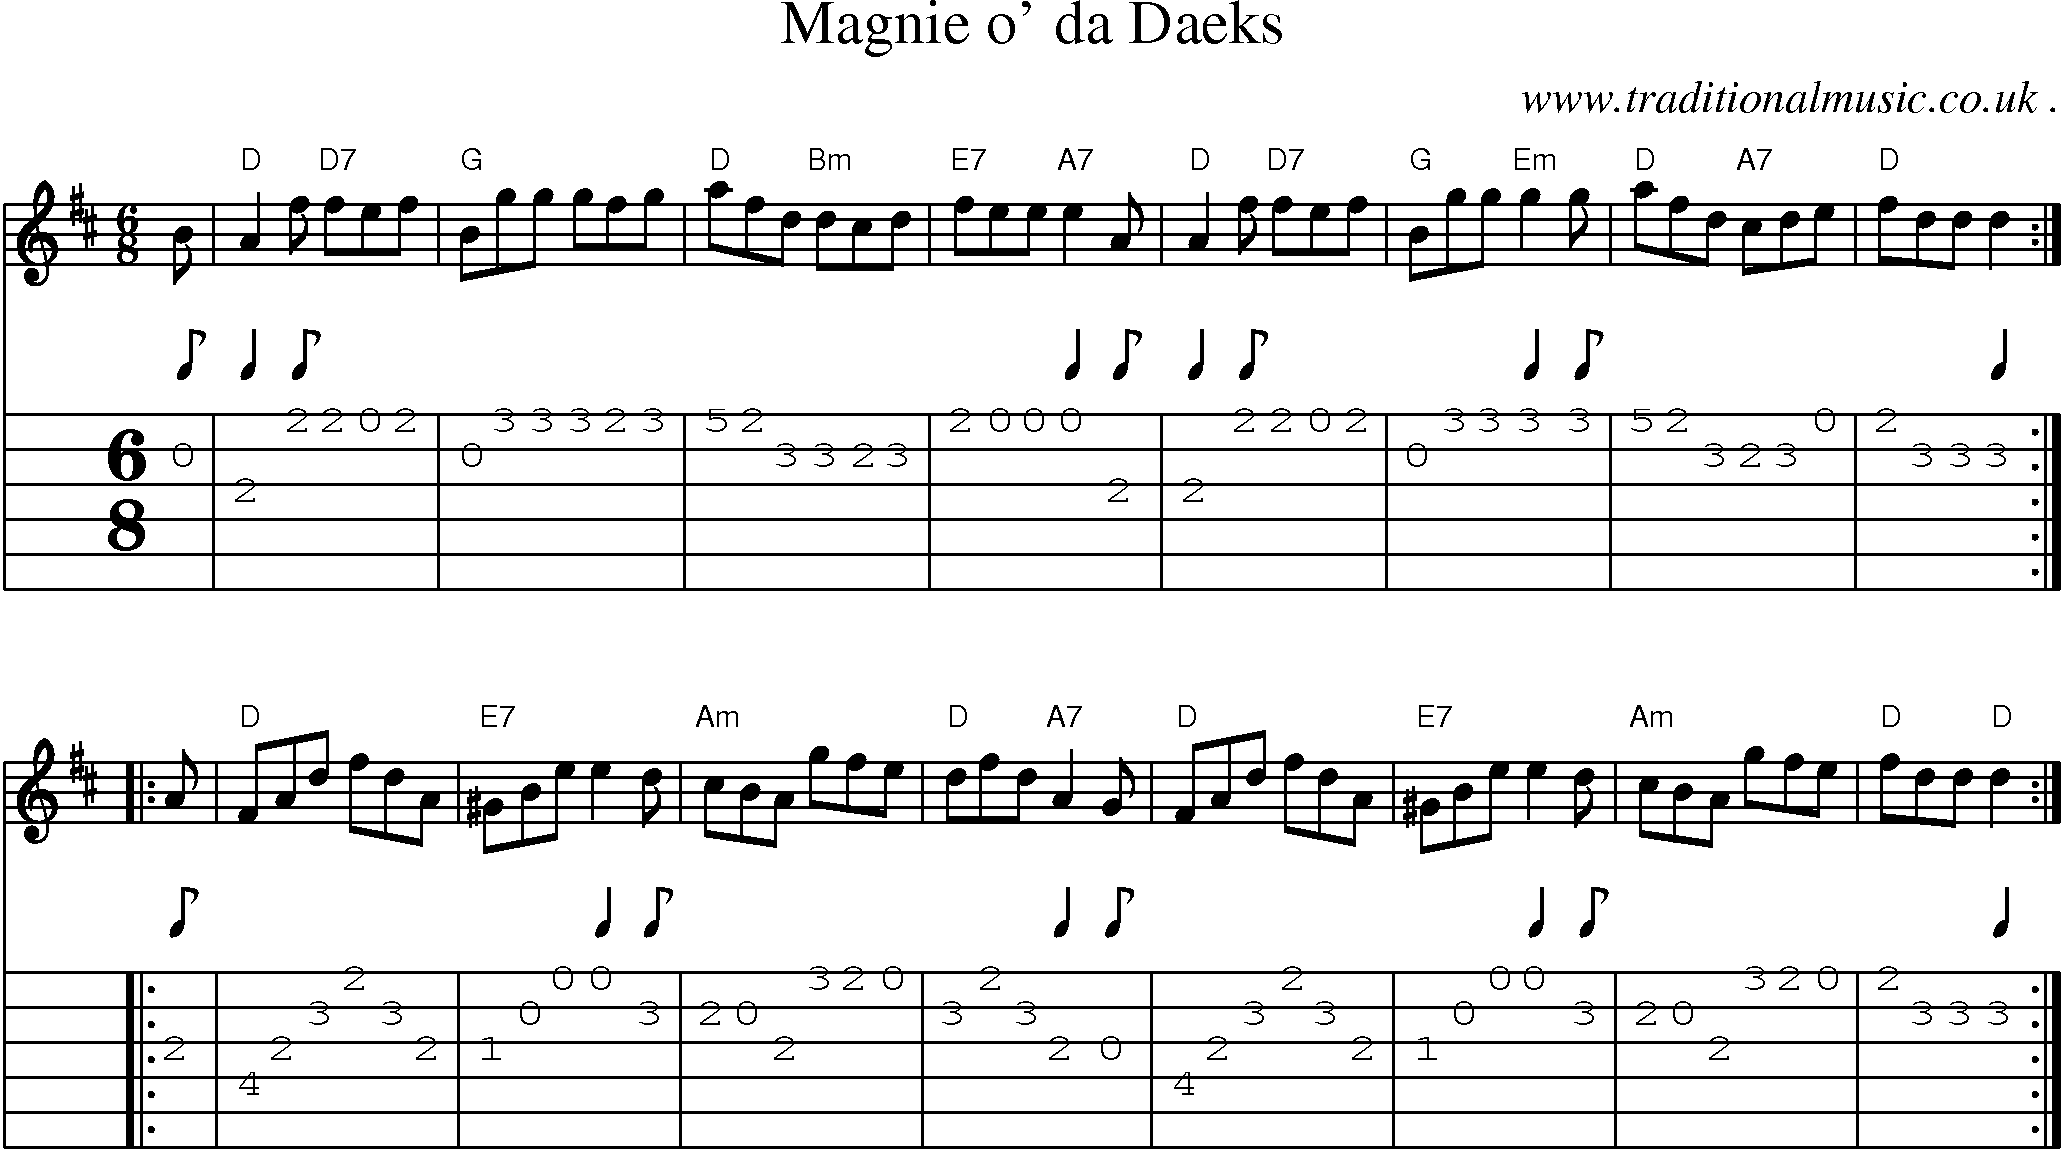 Sheet-music  score, Chords and Guitar Tabs for Magnie O Da Daeks